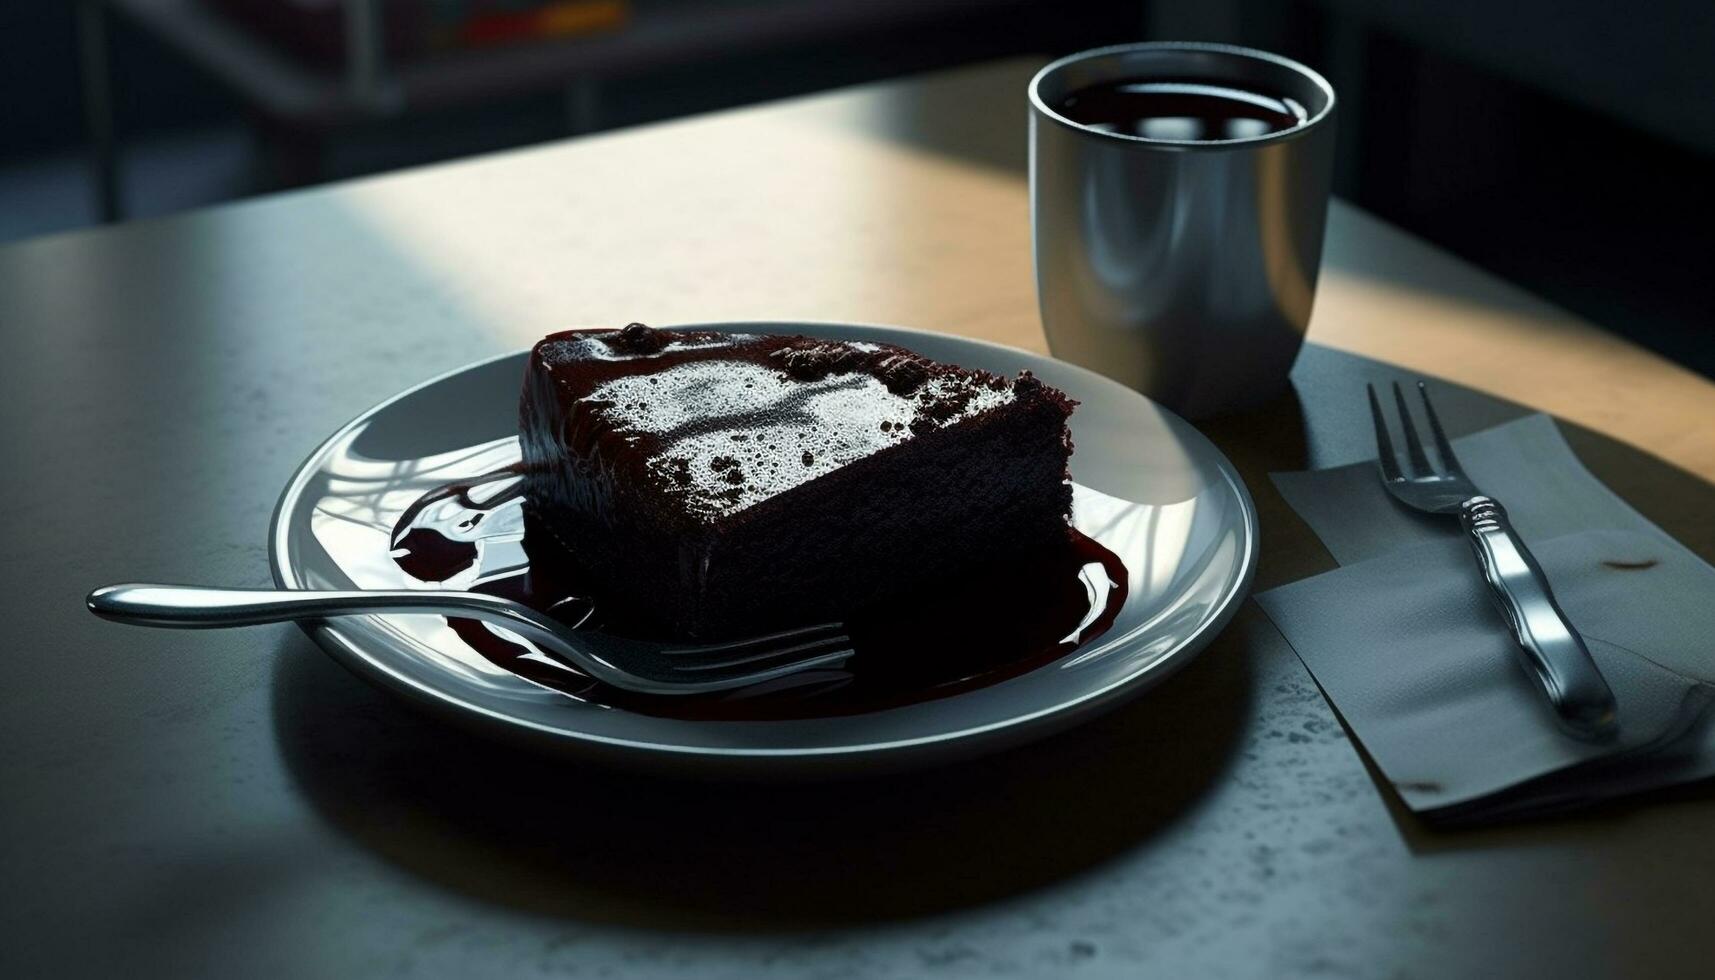 Indulgent chocolate dessert on elegant plate with fresh fruit slice generated by AI photo